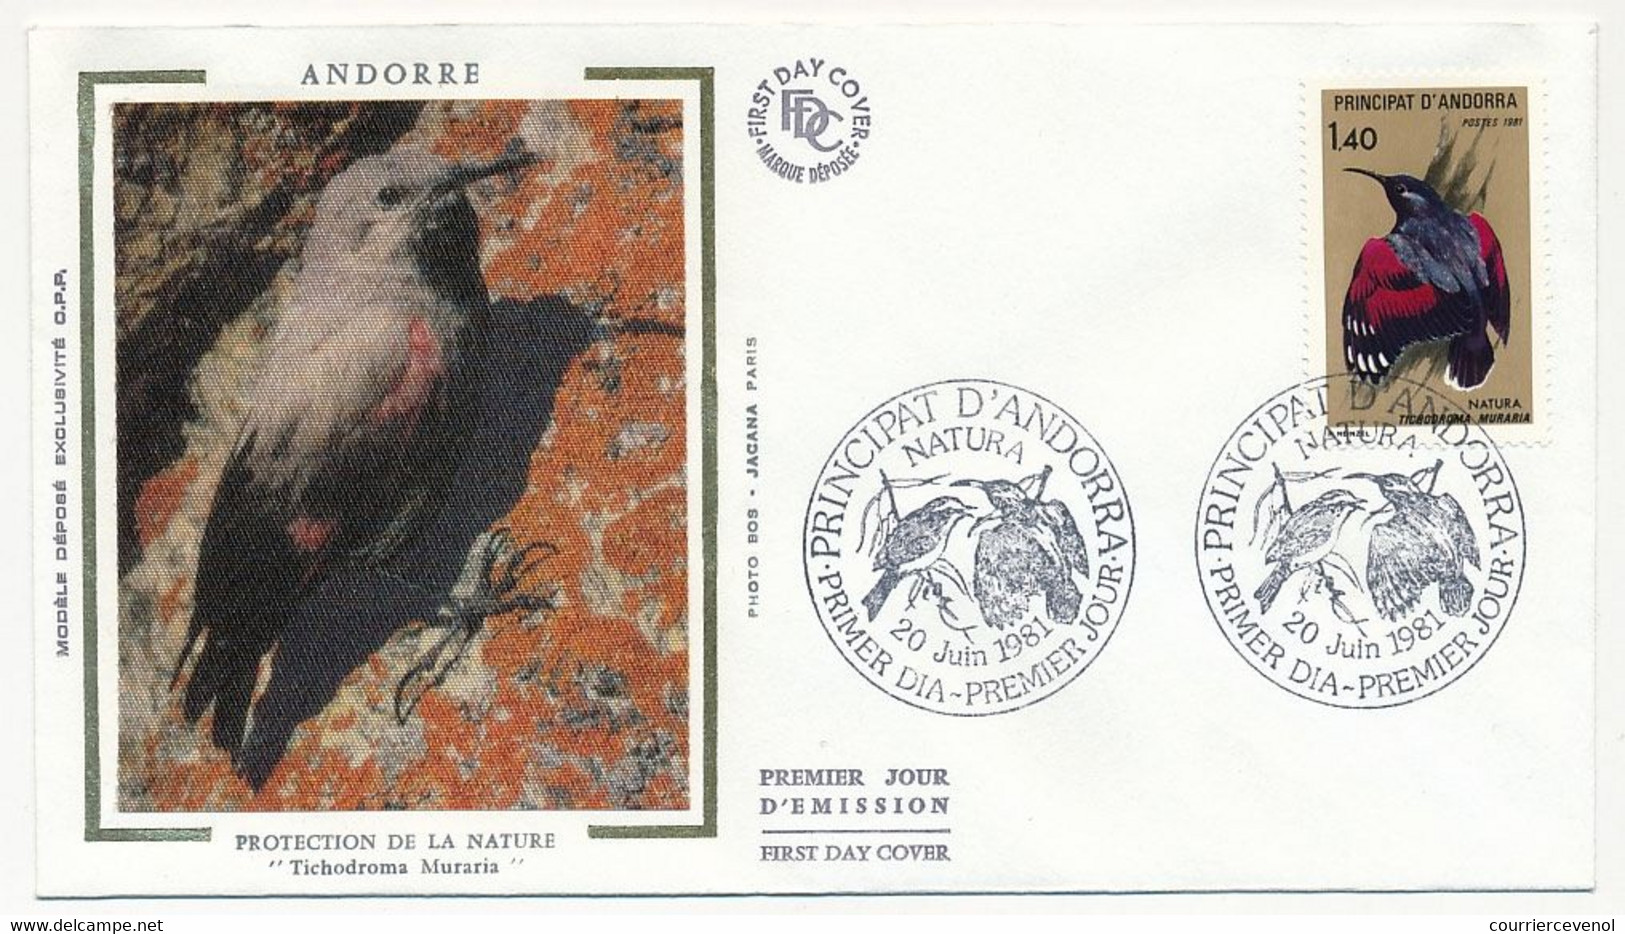 ANDORRE - 2 Env FDC Soie  => Protection Nature - 1,20 Et 1,40 "Natura" 20 Juin 1981 - Principat D'Andorra - FDC